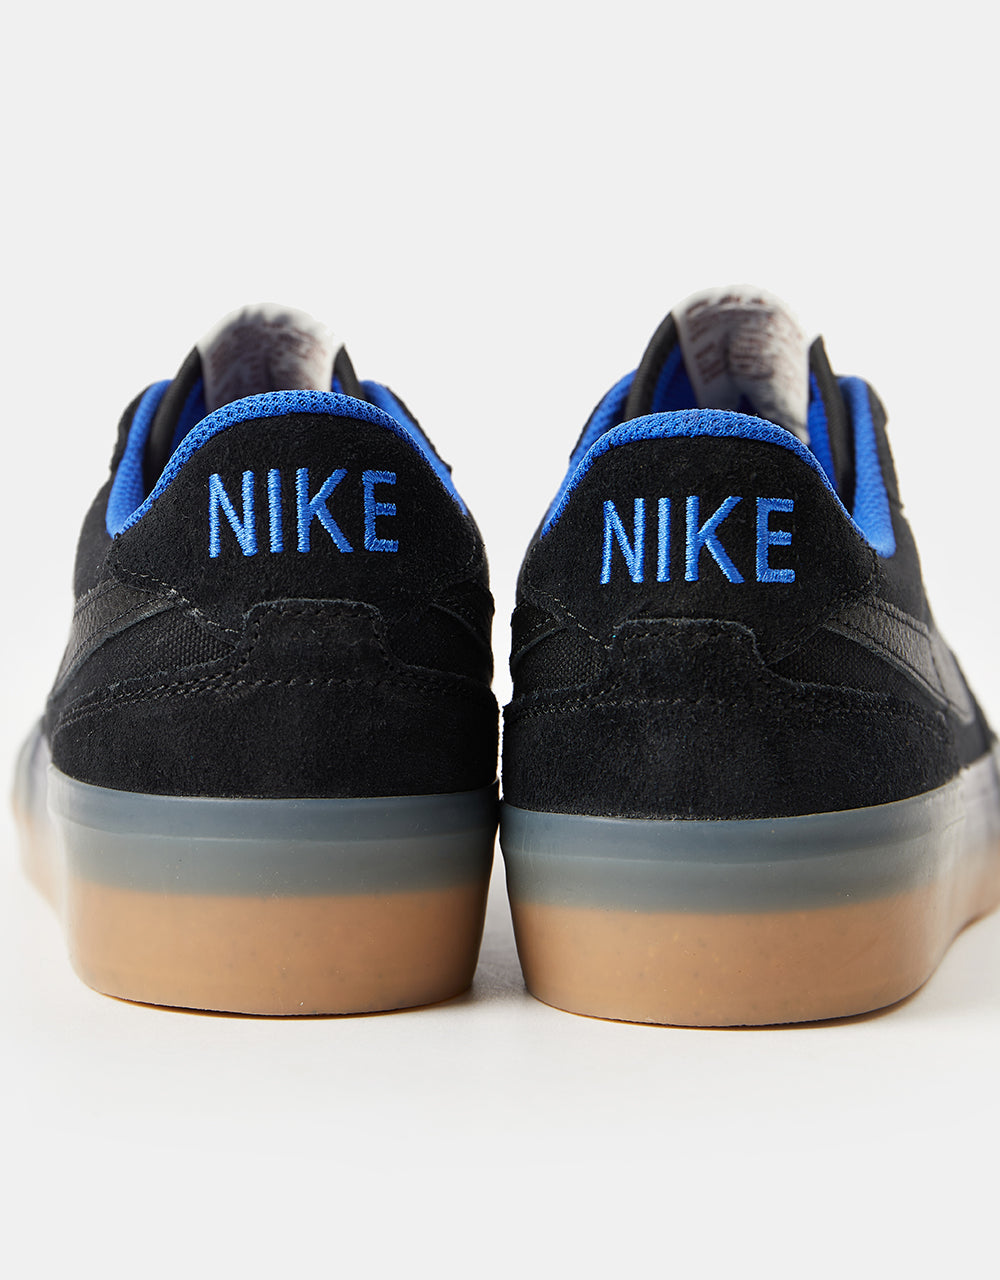 Nike SB Pogo Premium Skate Shoes - Black/Black-Hyper Royal-Gum Light Brown